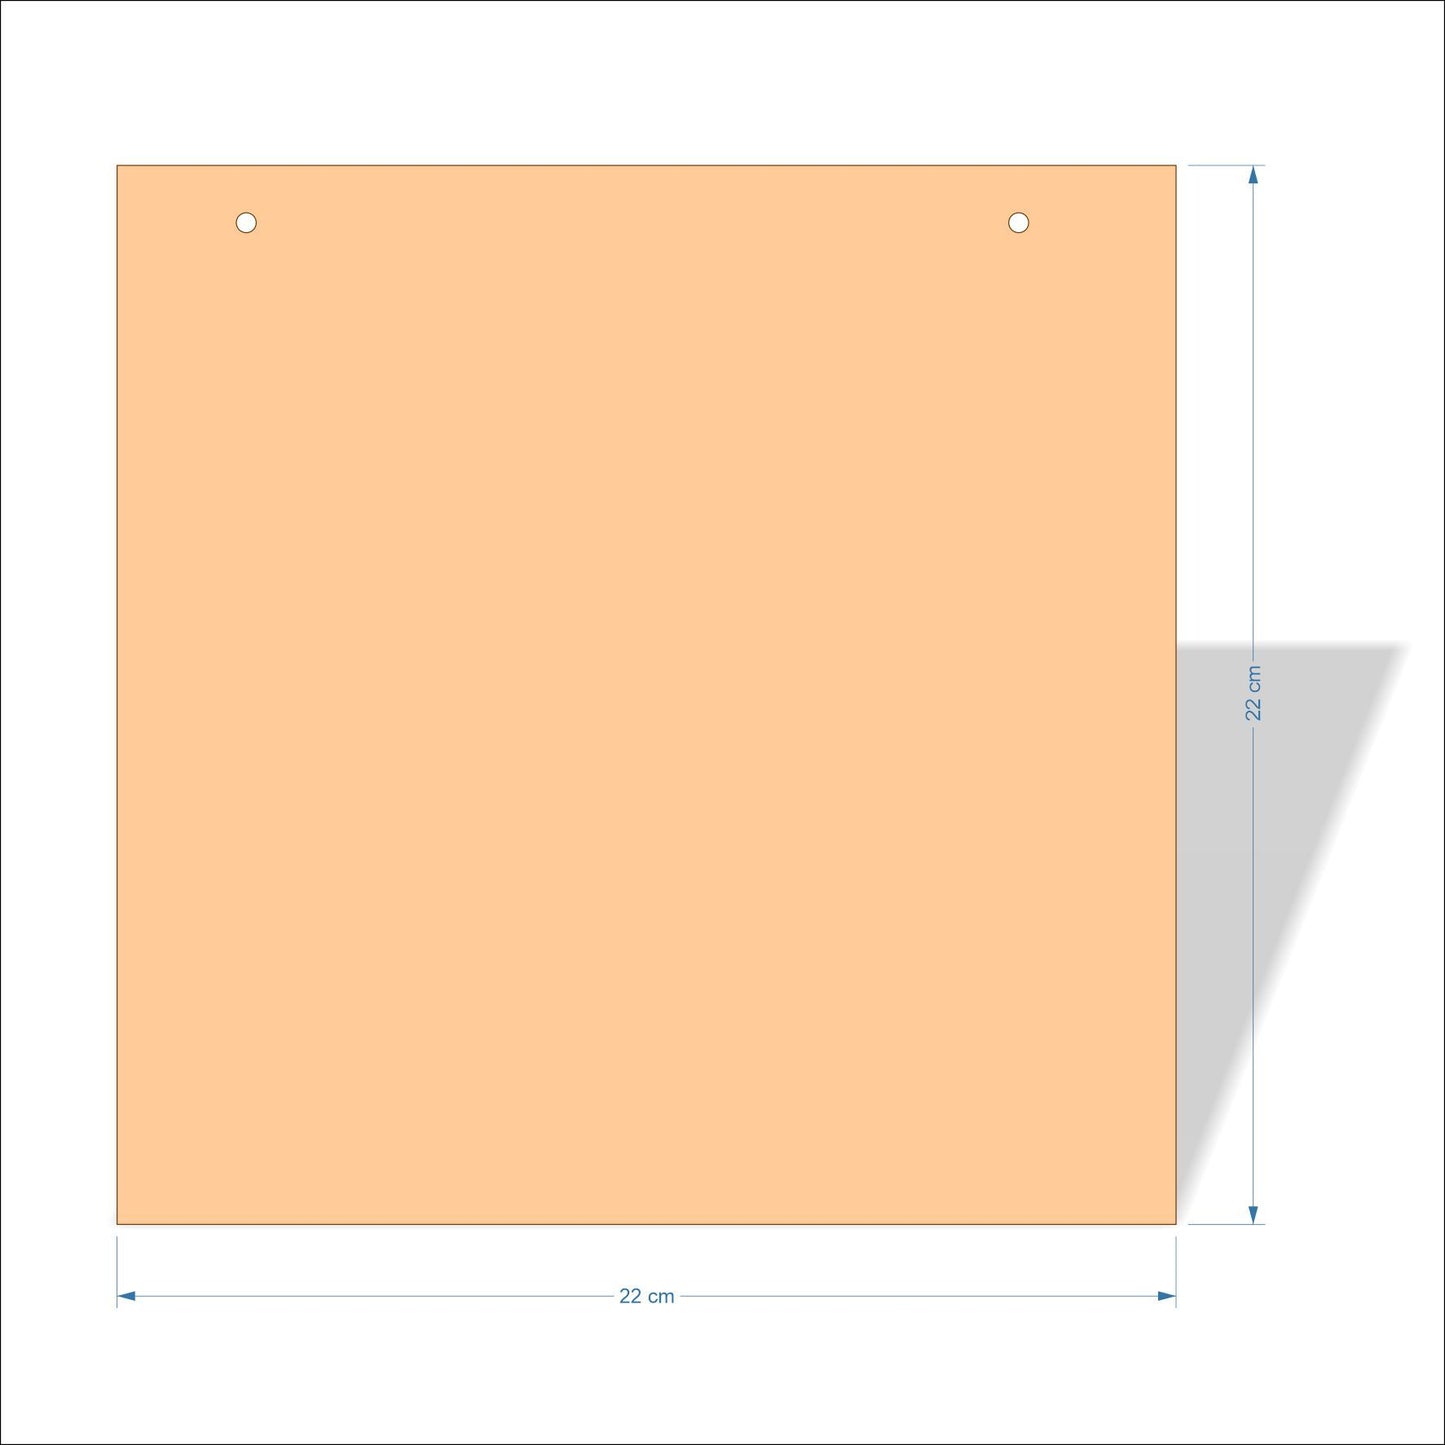 22 cm X 22 cm 3mm MDF Plaques with square corners